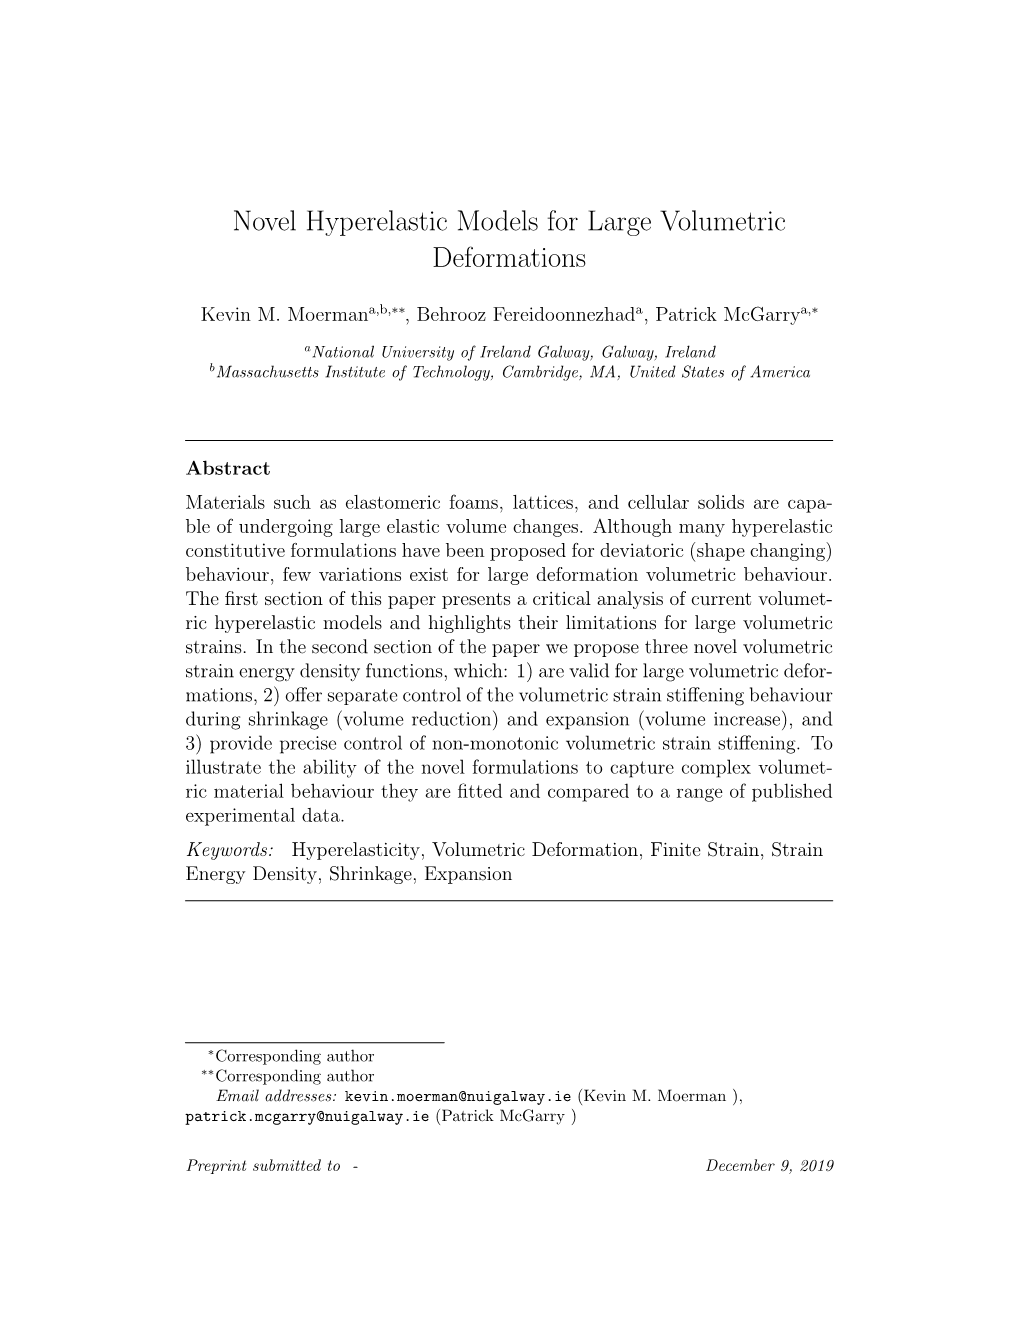 Novel Hyperelastic Models for Large Volumetric Deformations